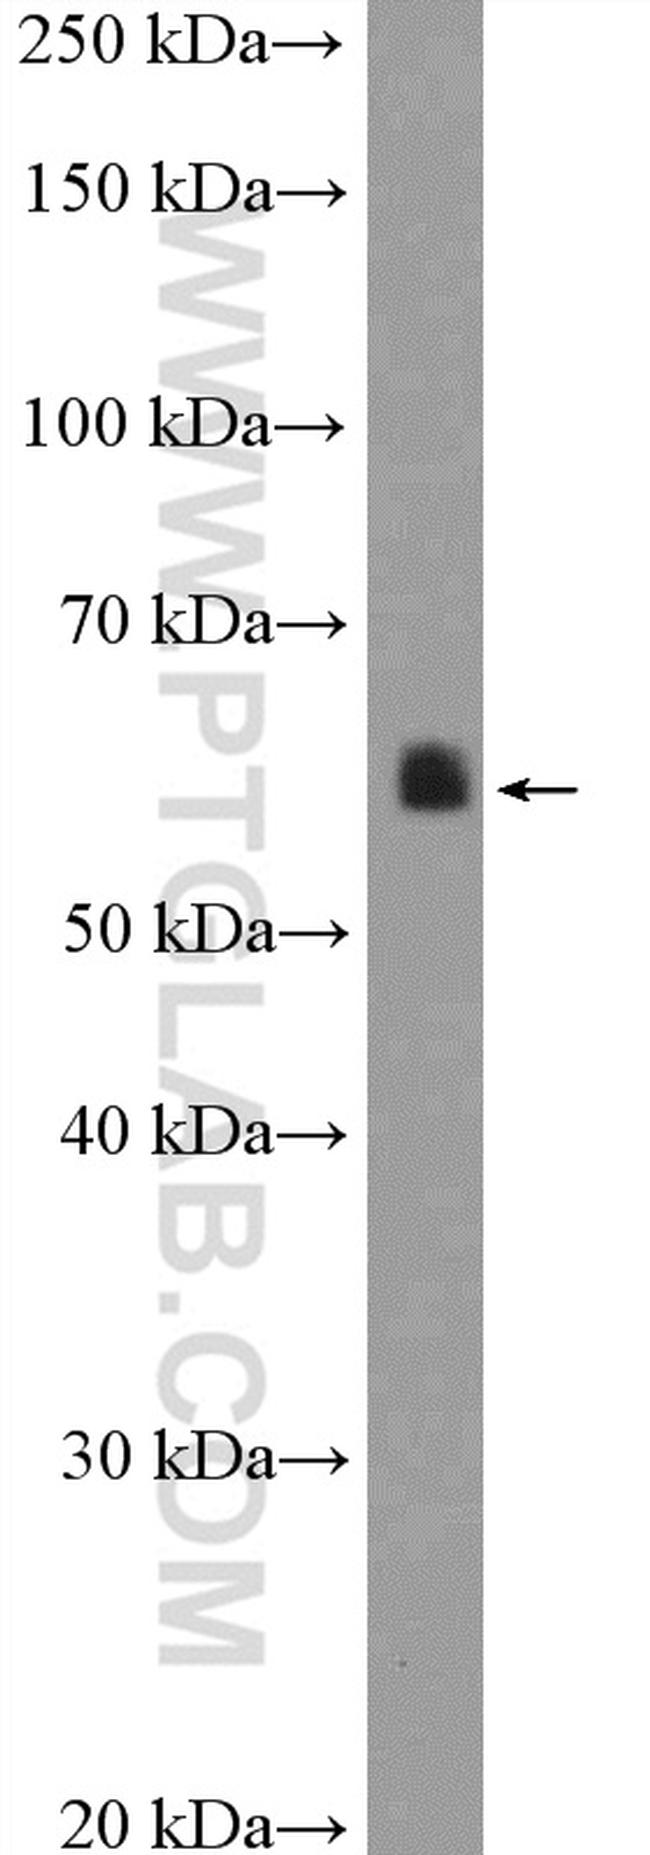 calreticulin Antibody in Western Blot (WB)